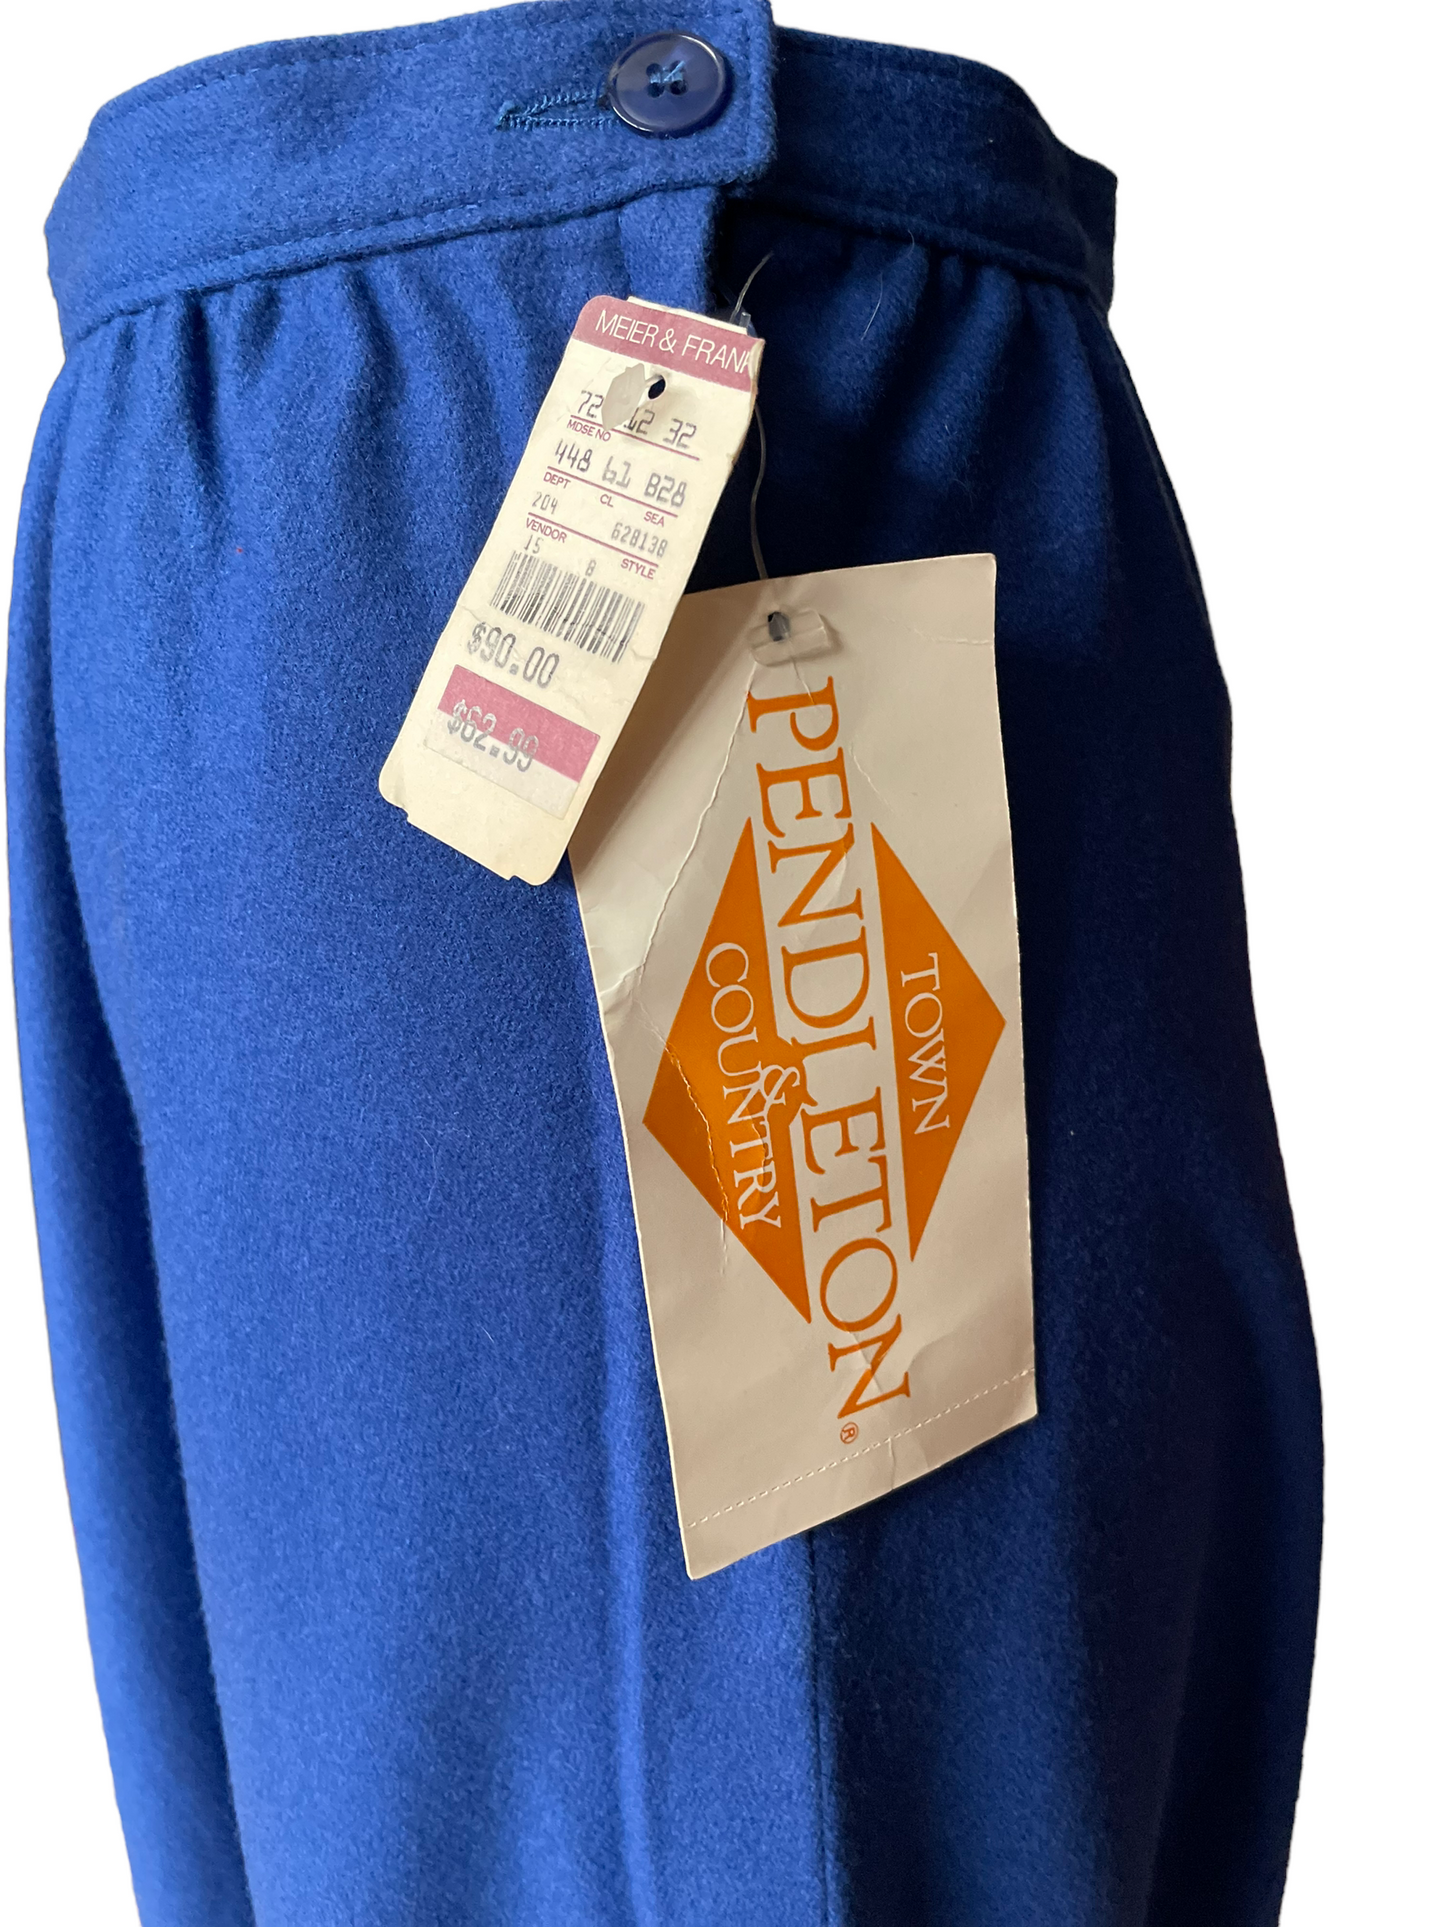 Sales tage view of Vintage 1980s Pendleton Circle Skirt | Barn Owl Vintage | Seattle True Vintage Skirts